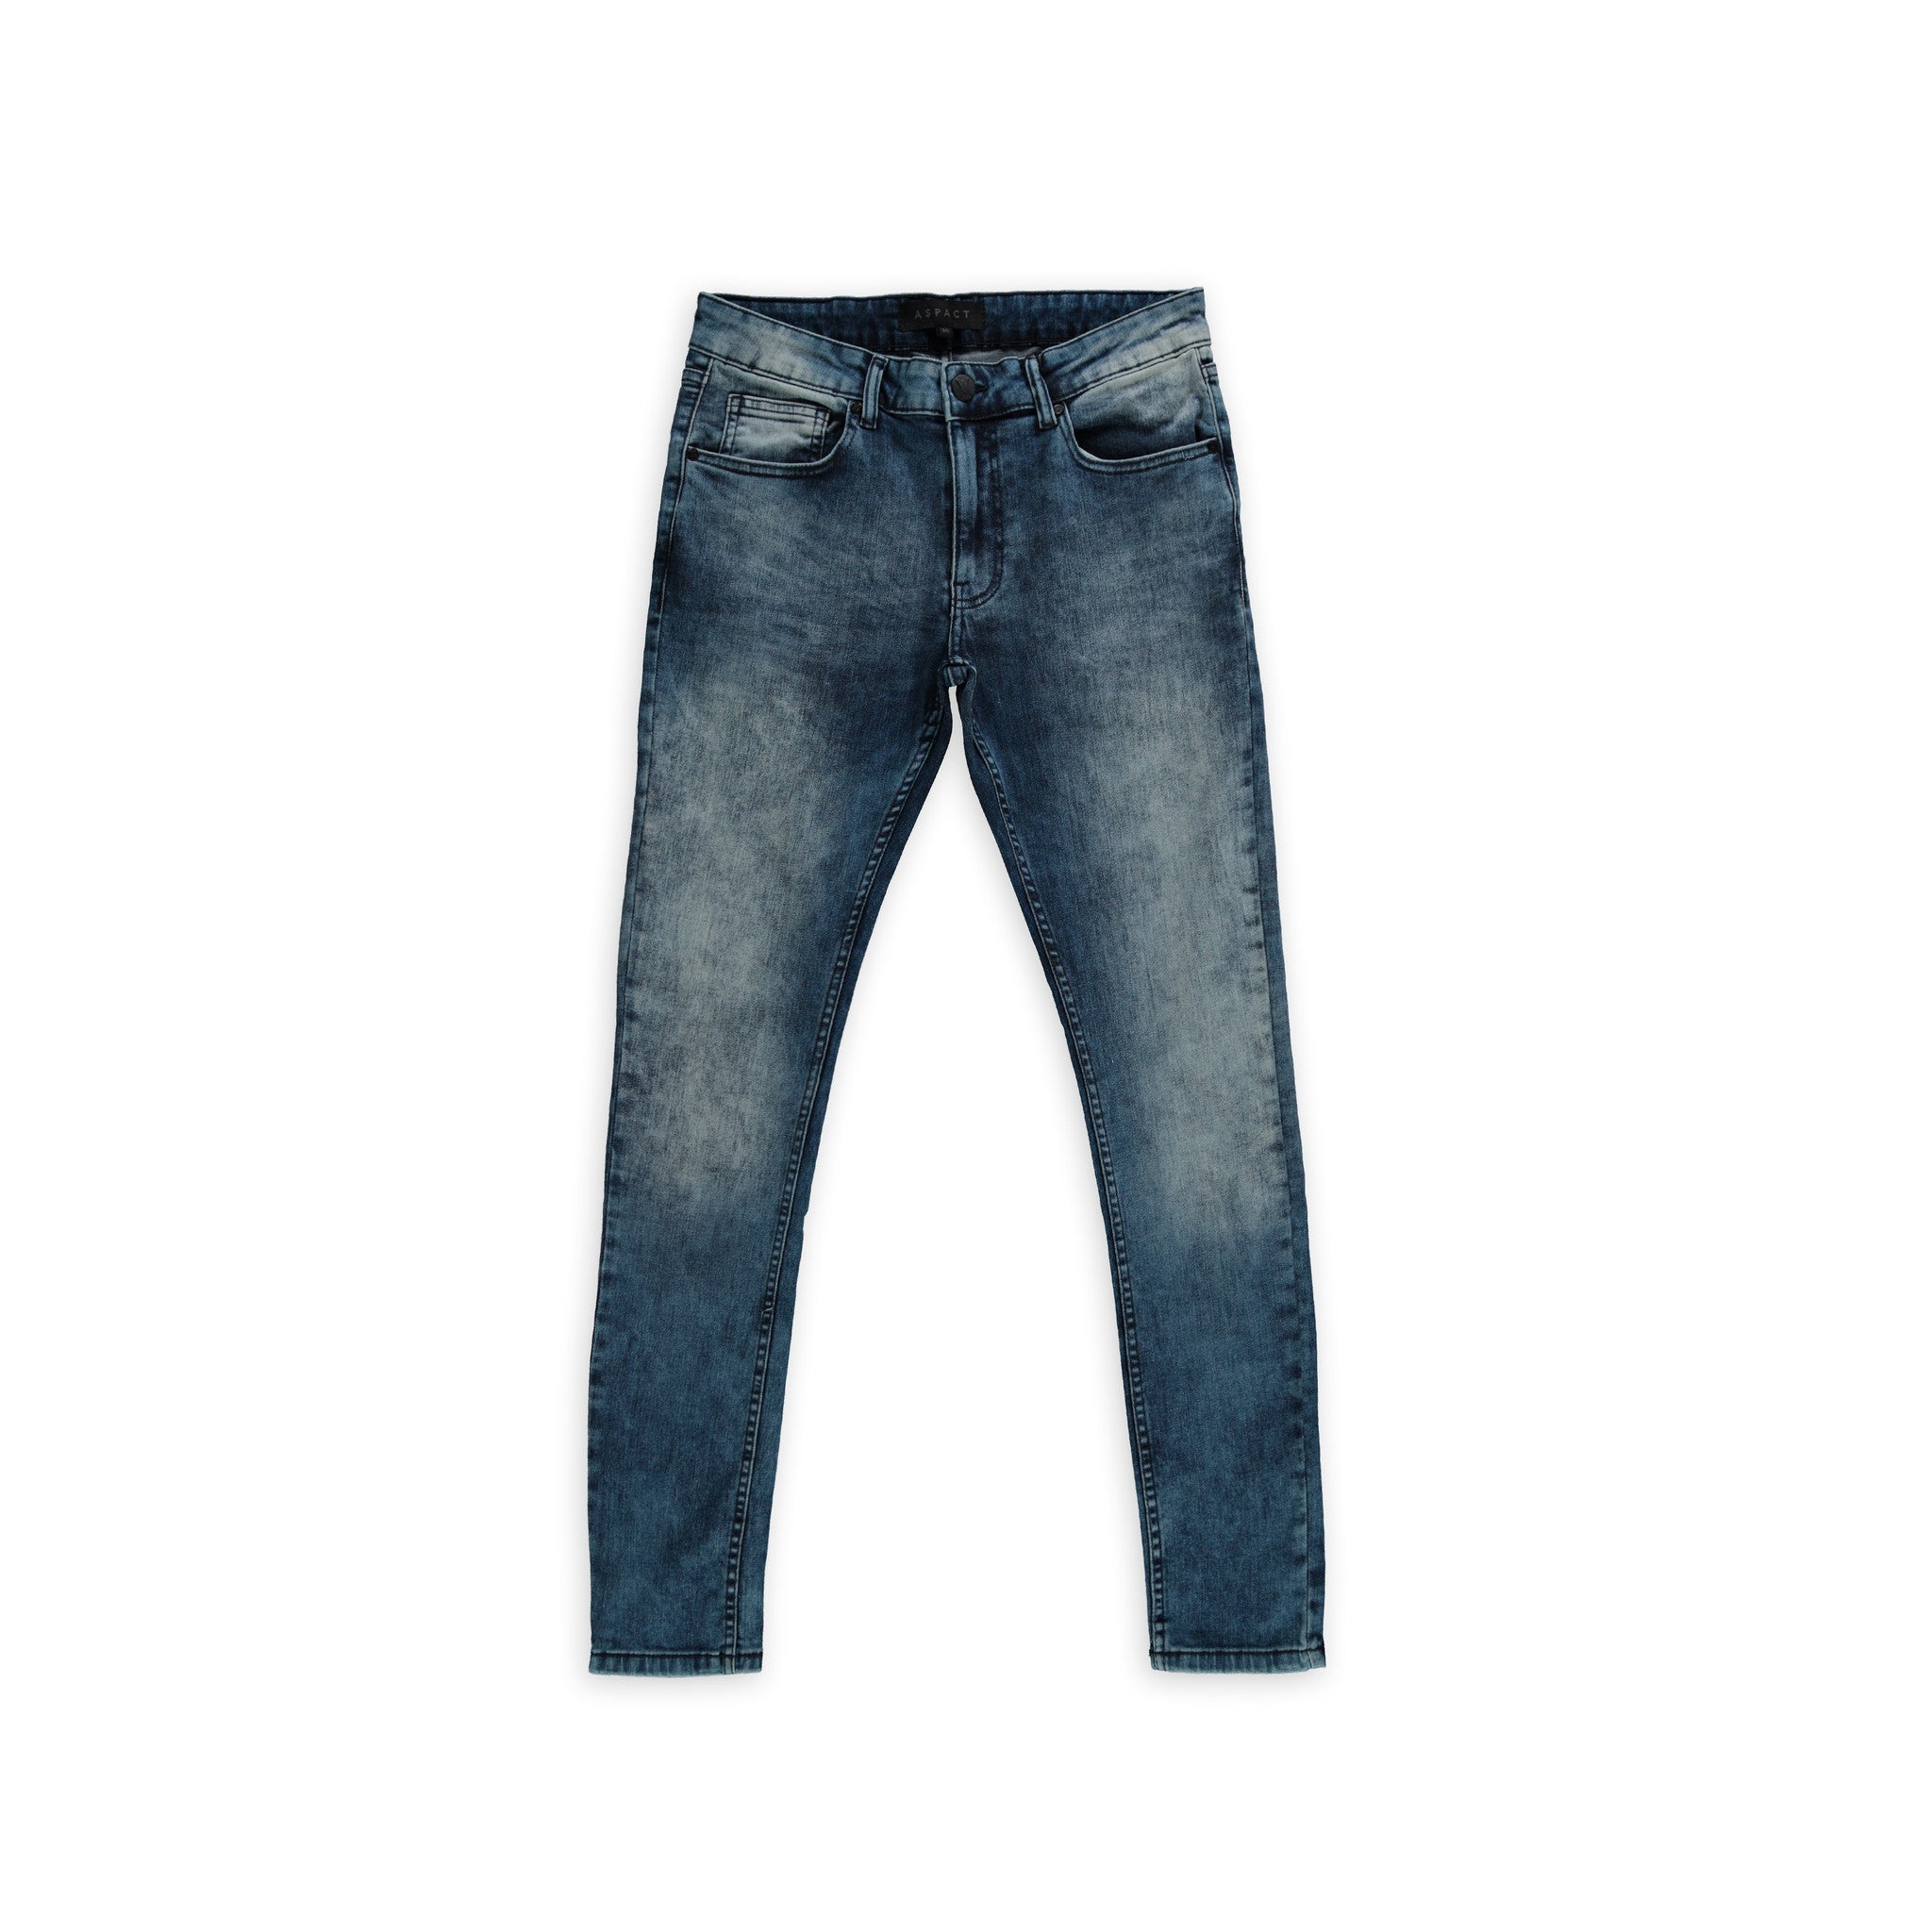 Aspact Jeans 16.0 Blauw